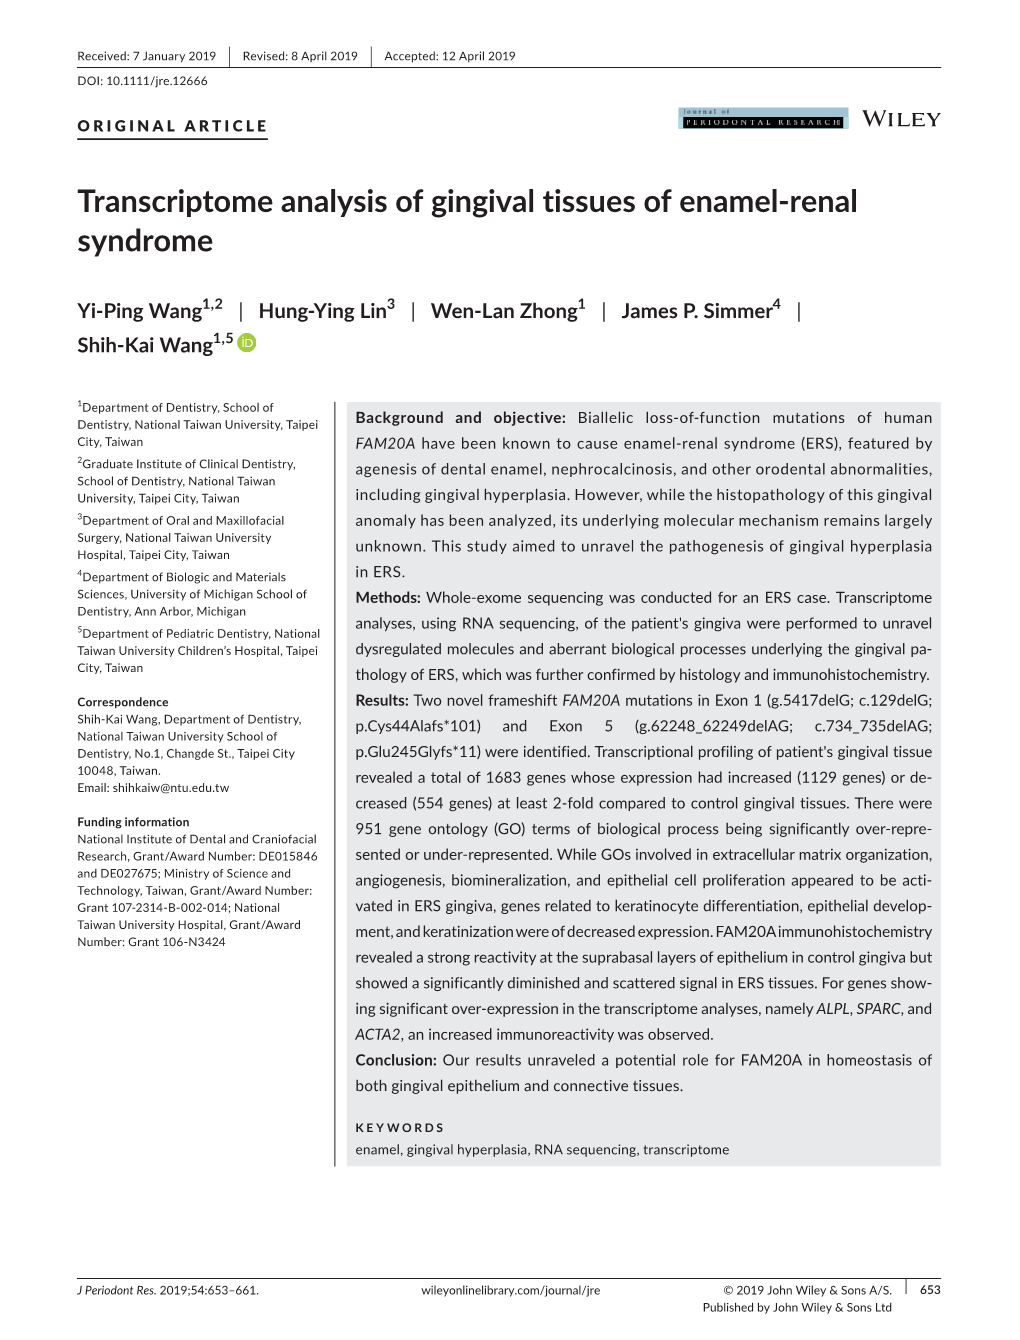 Transcriptome Analysis of Gingival Tissues of Enamel&#X2010